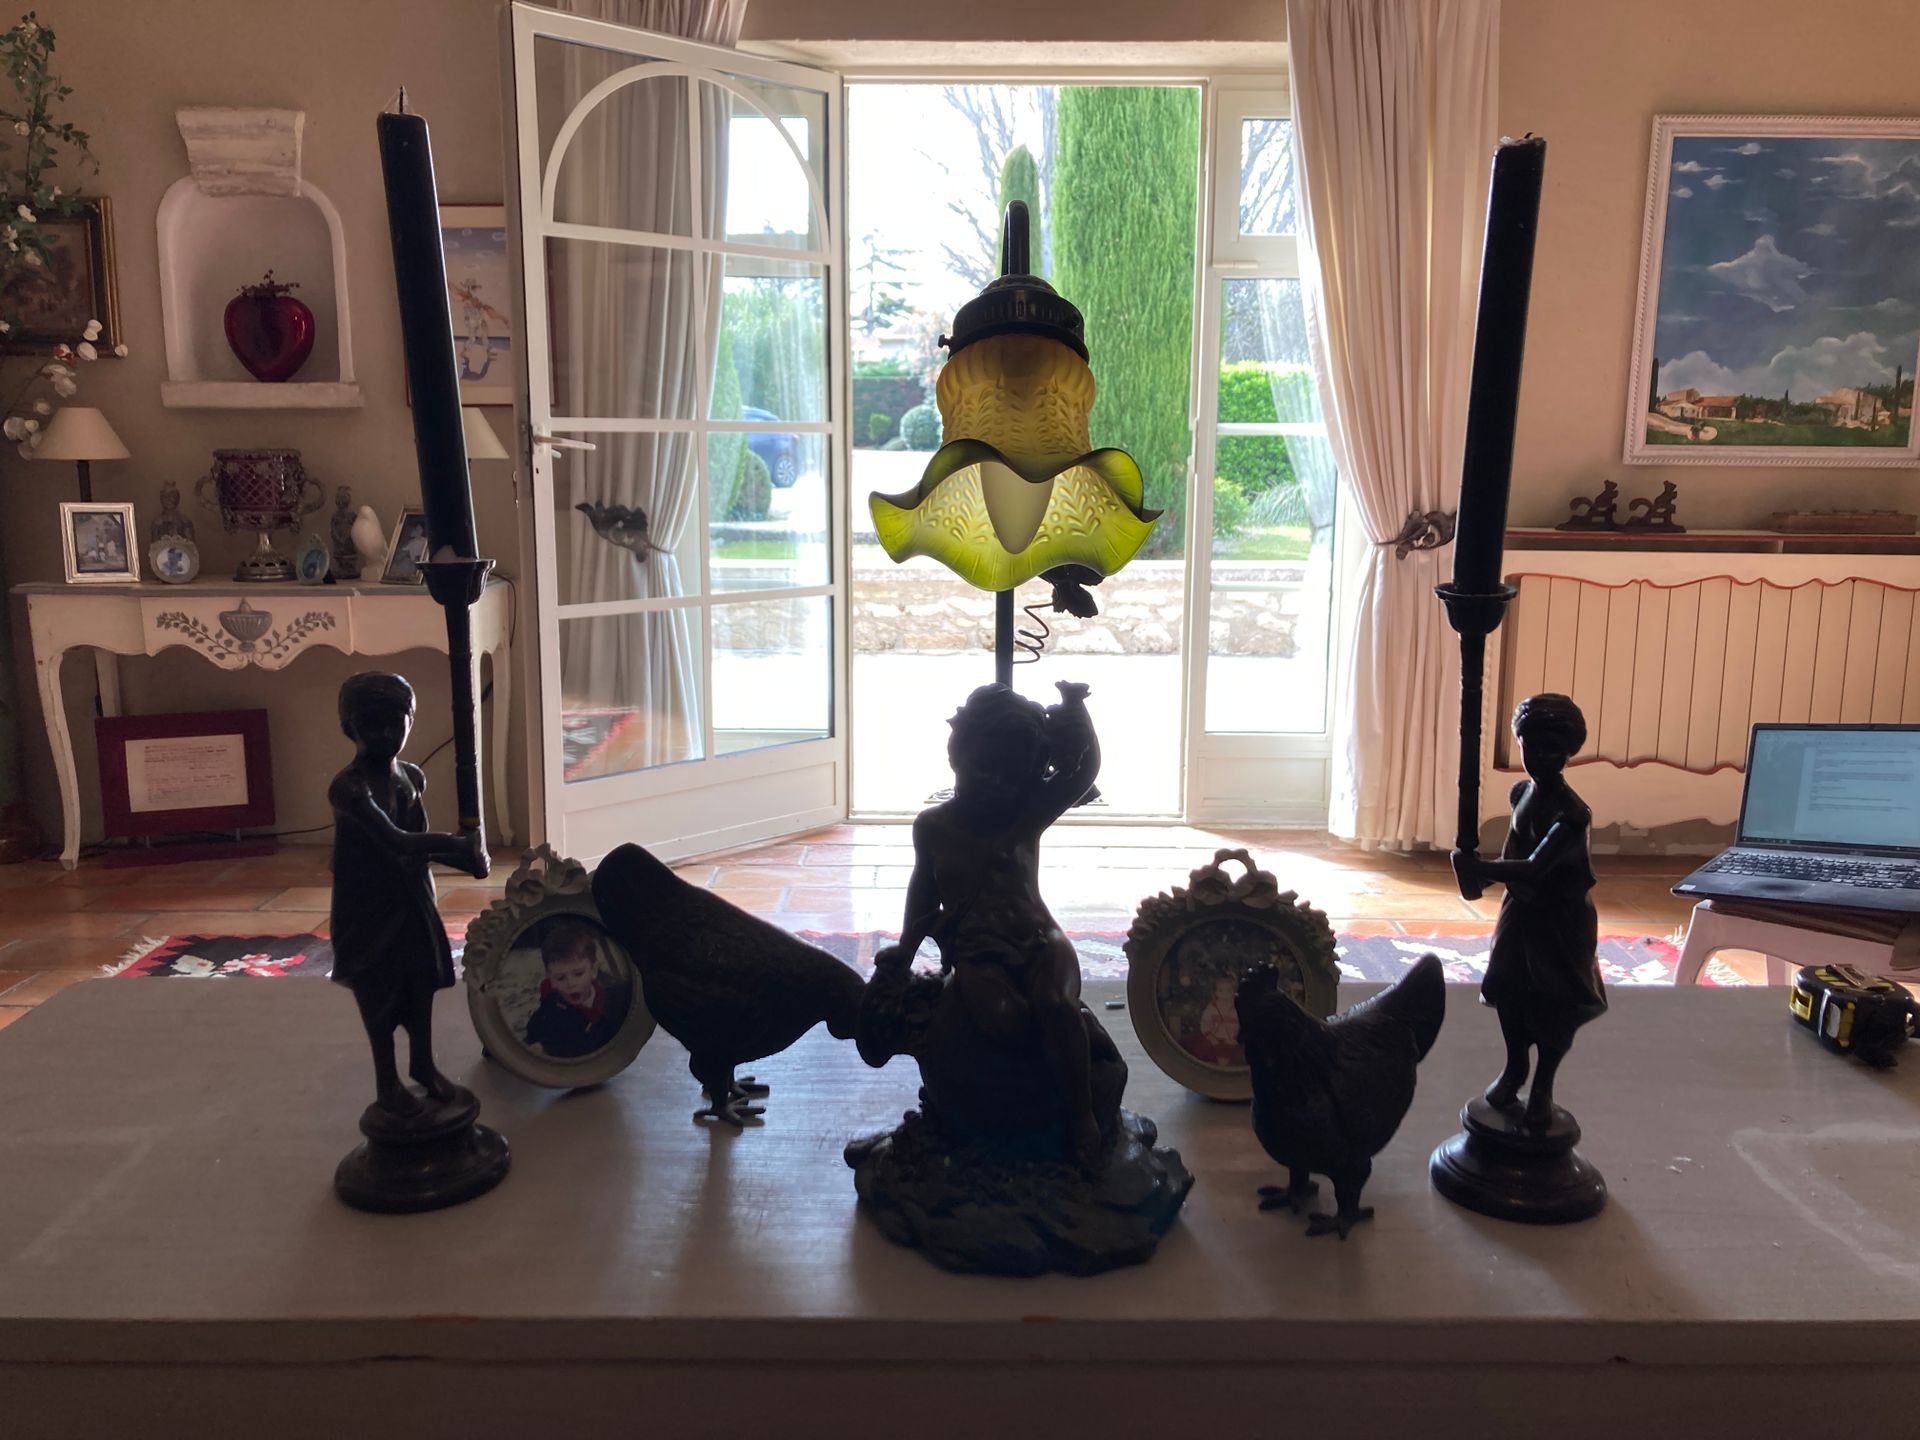 Null 抛光的金属套装包括两个烛台，两只母鸡，两个rechampie木框架，一盏灯描绘了一个坐在花瓶上拿着葡萄的普蒂。